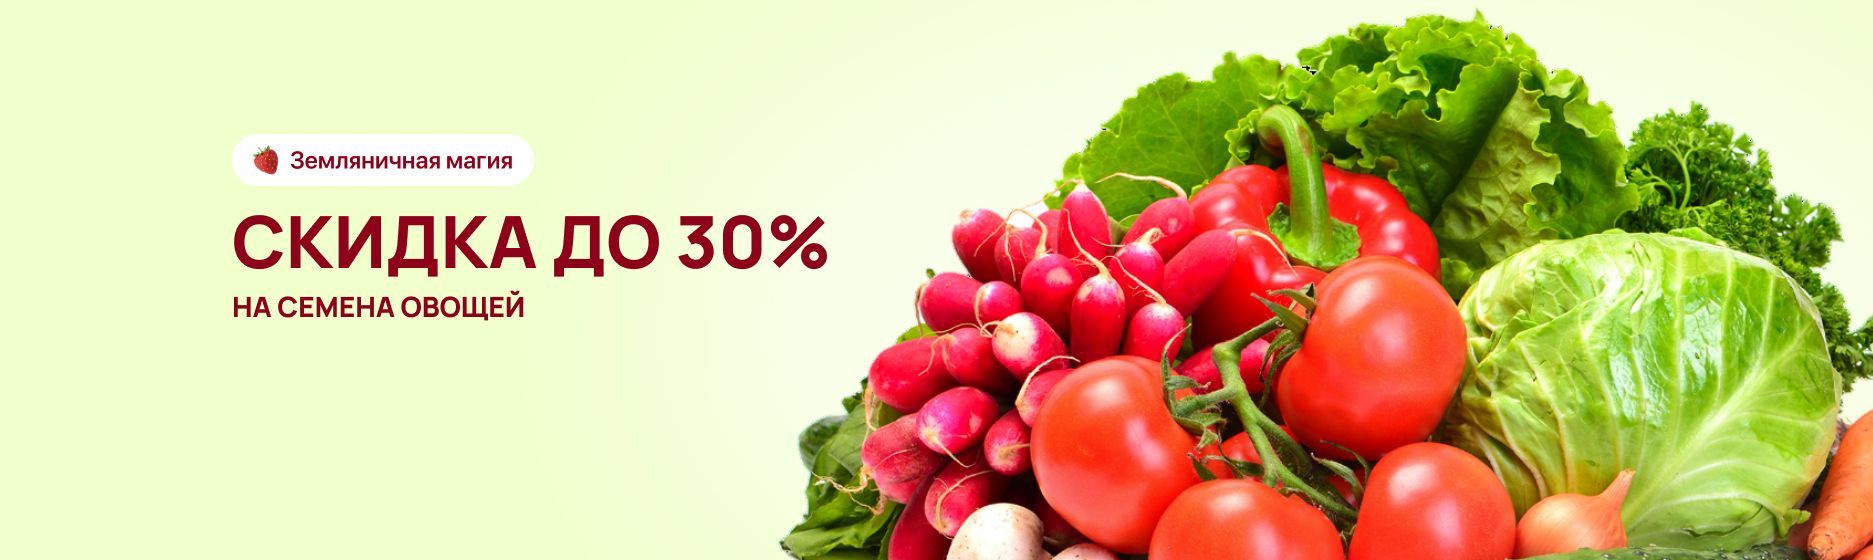 Скидка до 30% на семена овощей